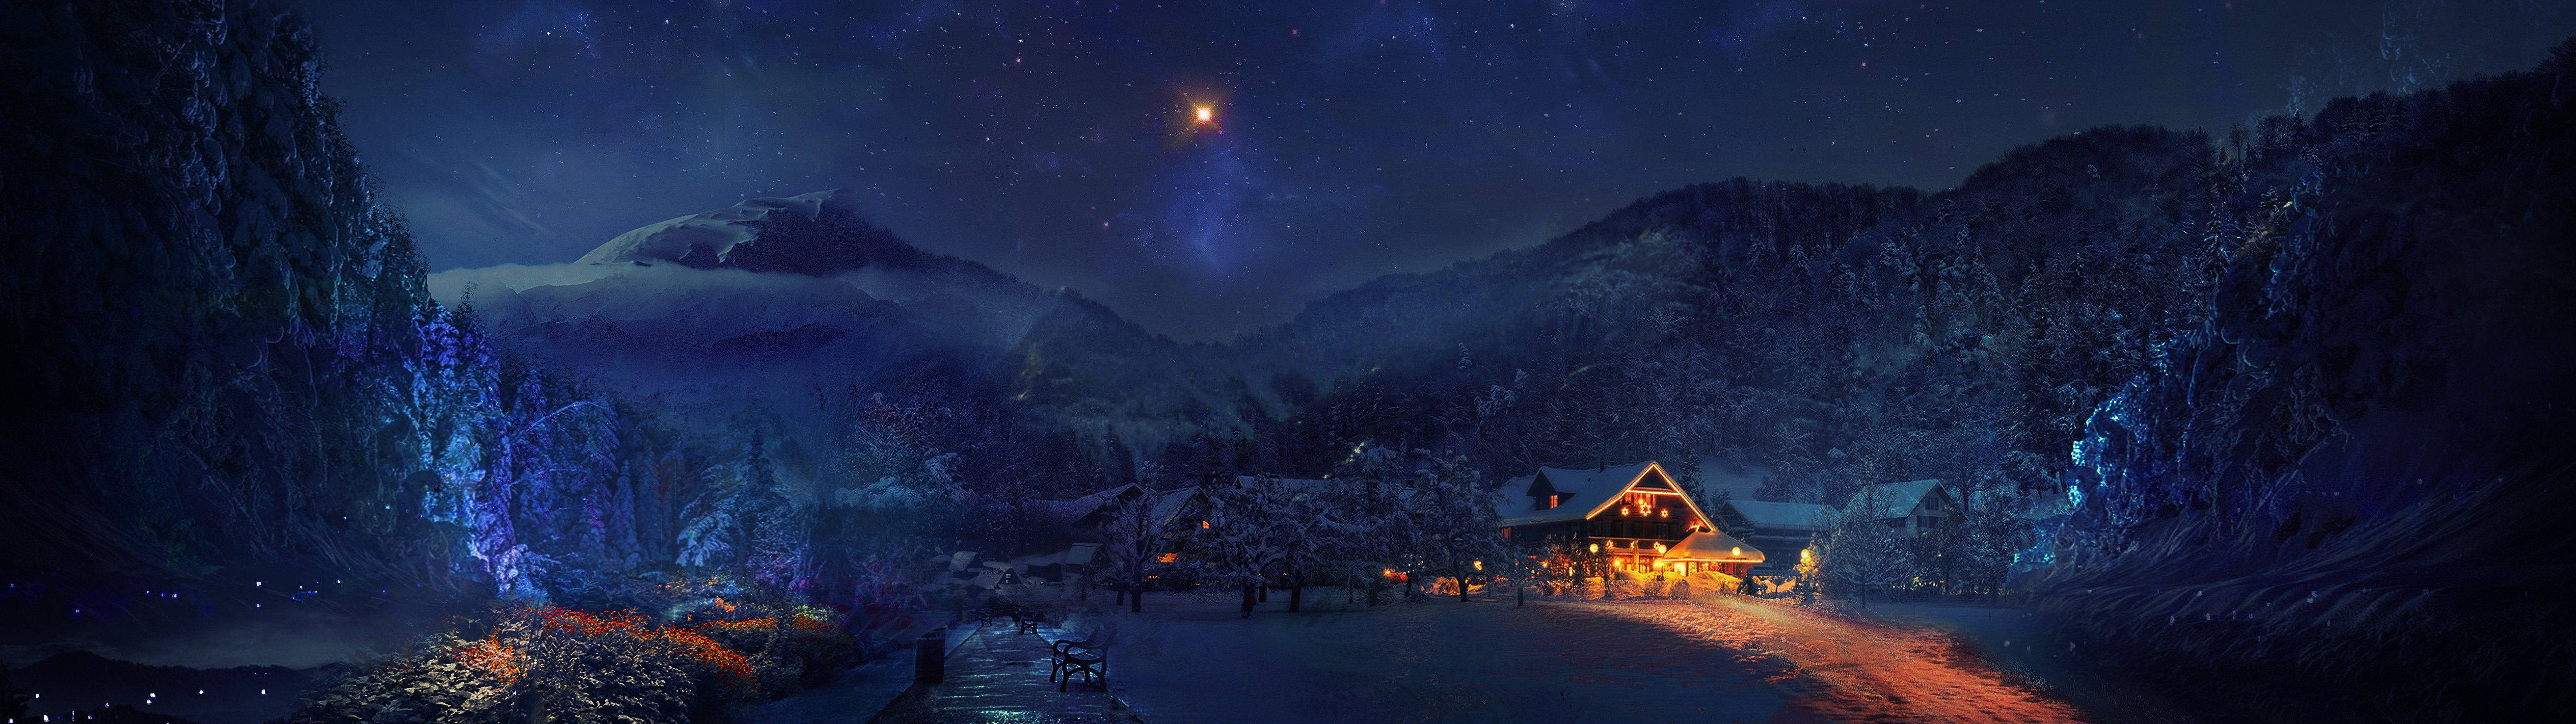 Cottage In Winter Night Background